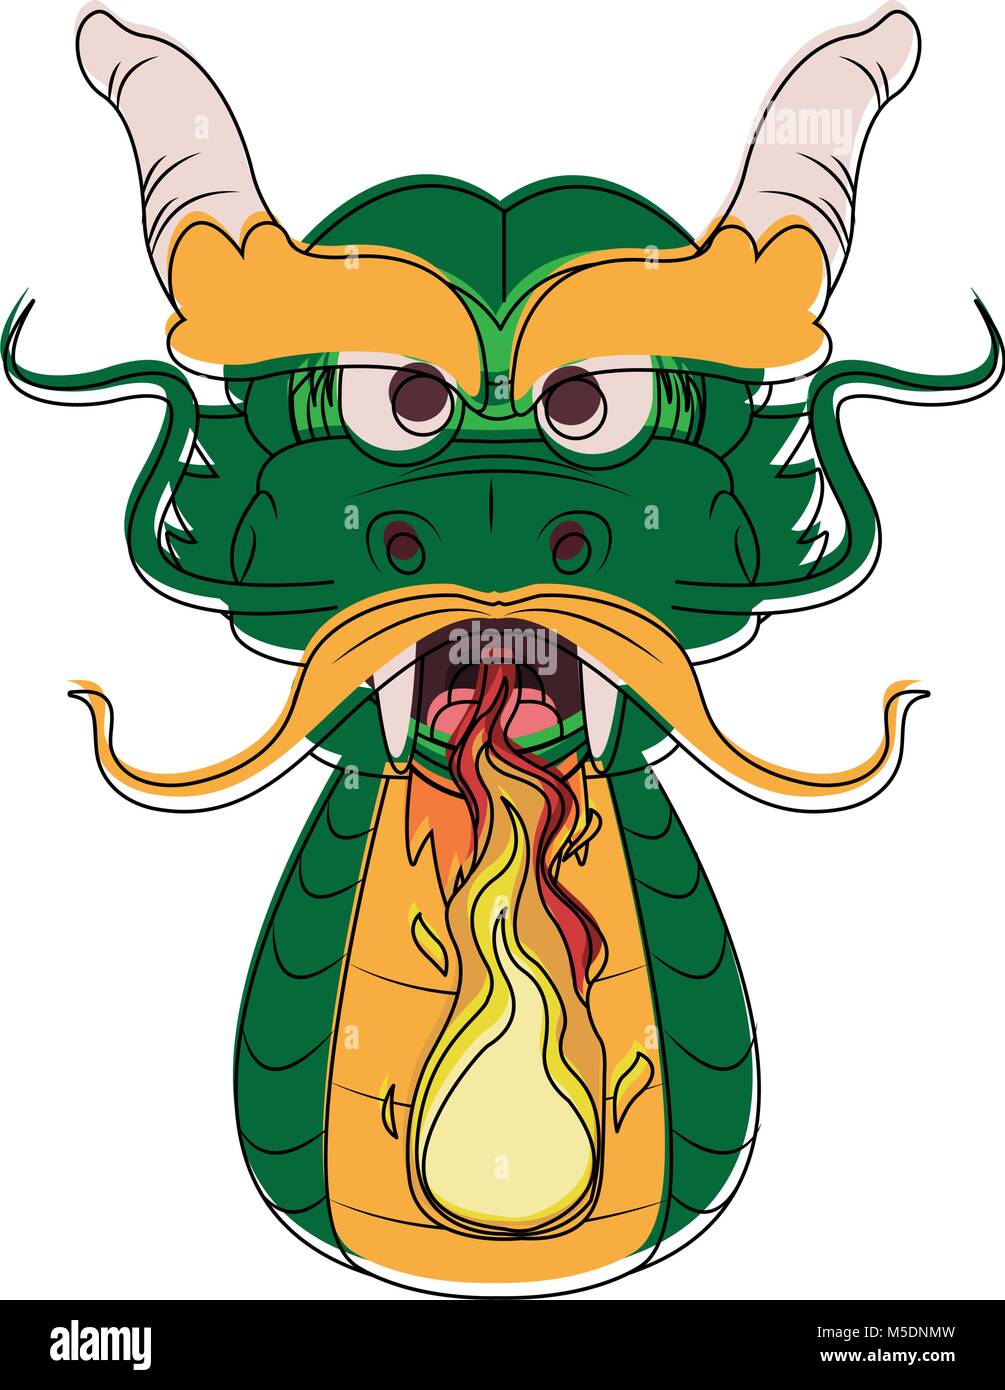 Dragon monster cartoon Stock Vector